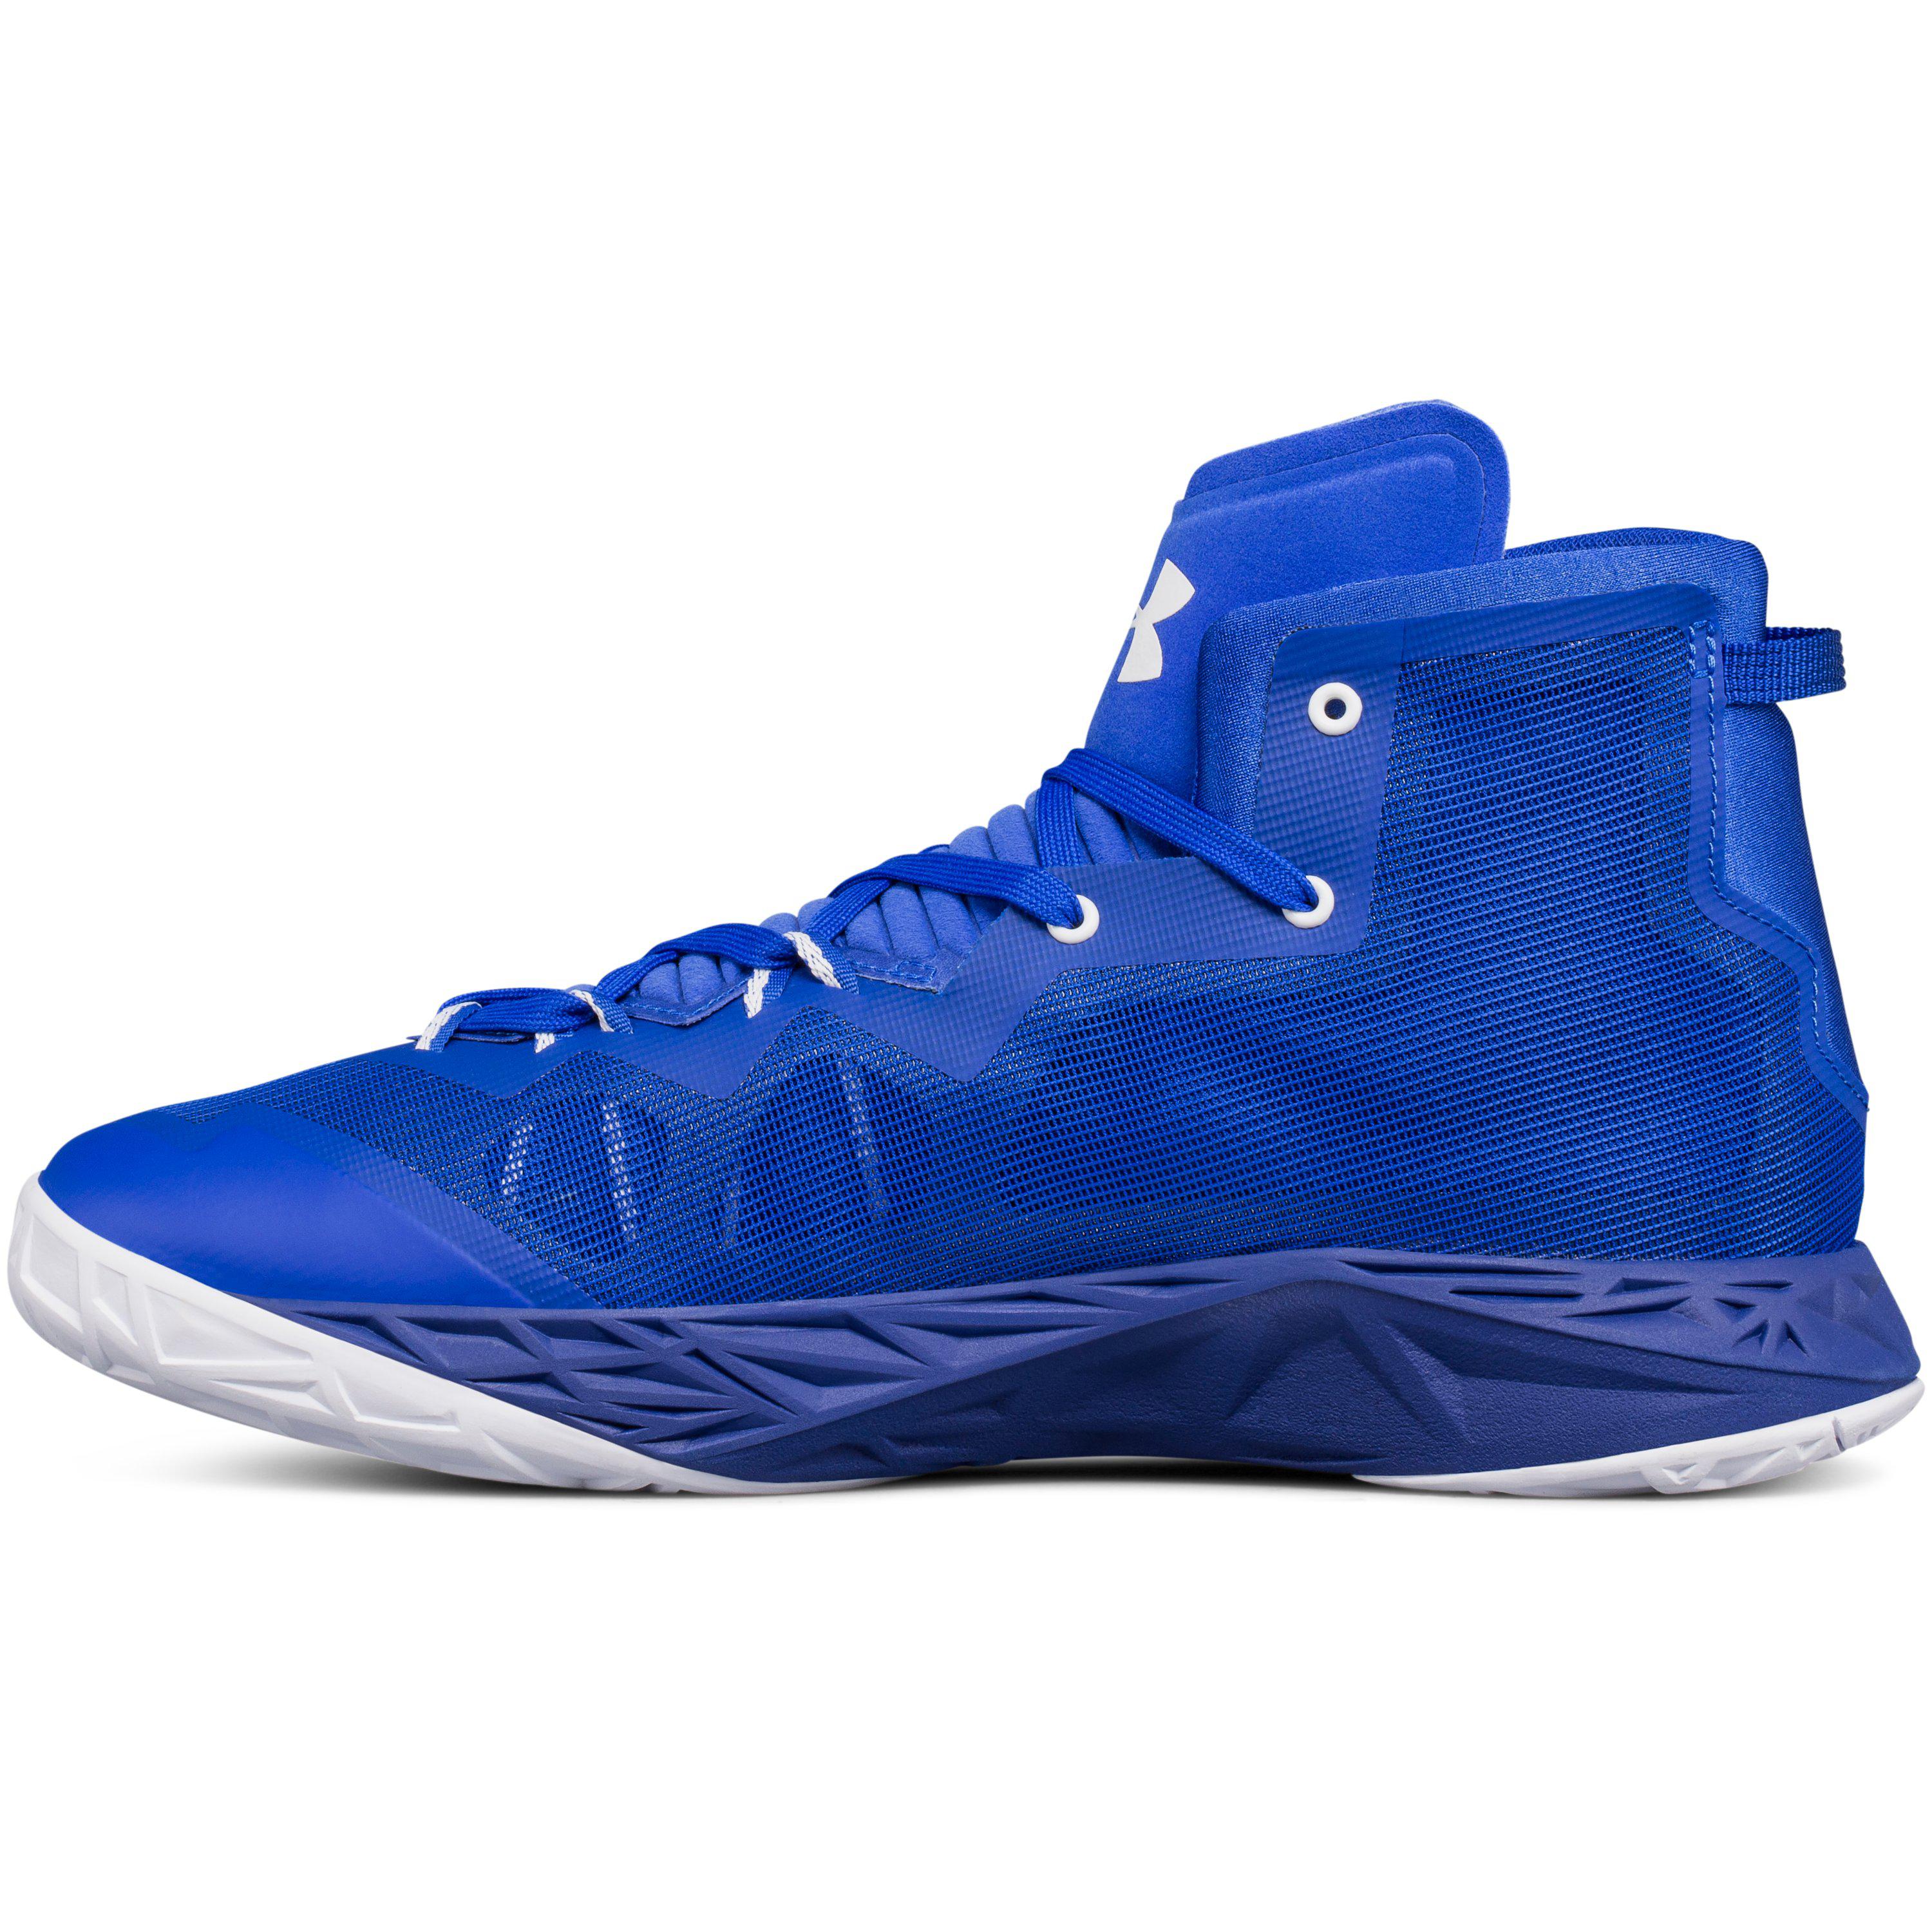 Under Armour Men's Ua Lightning 4 Basketball Shoes in Blue for Men - Lyst